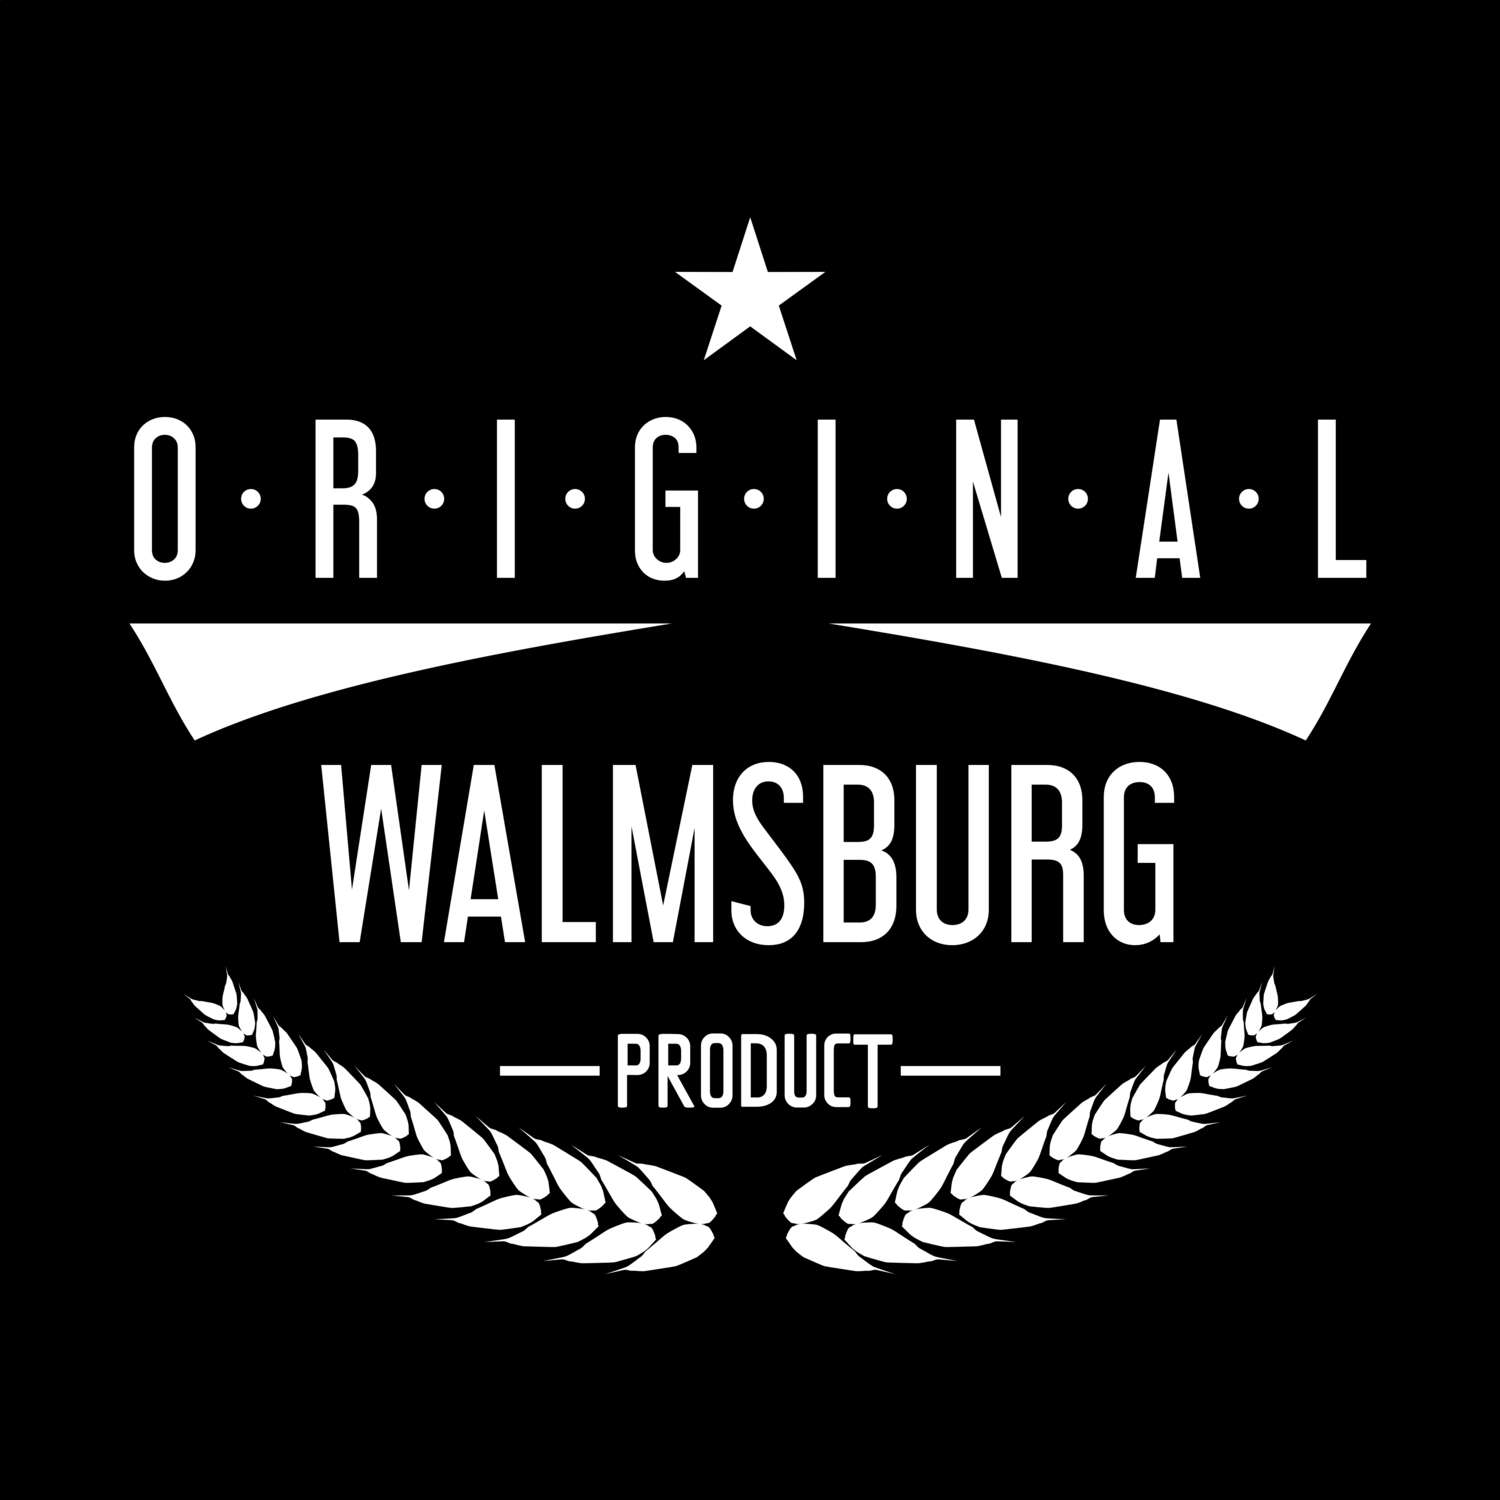 Walmsburg T-Shirt »Original Product«